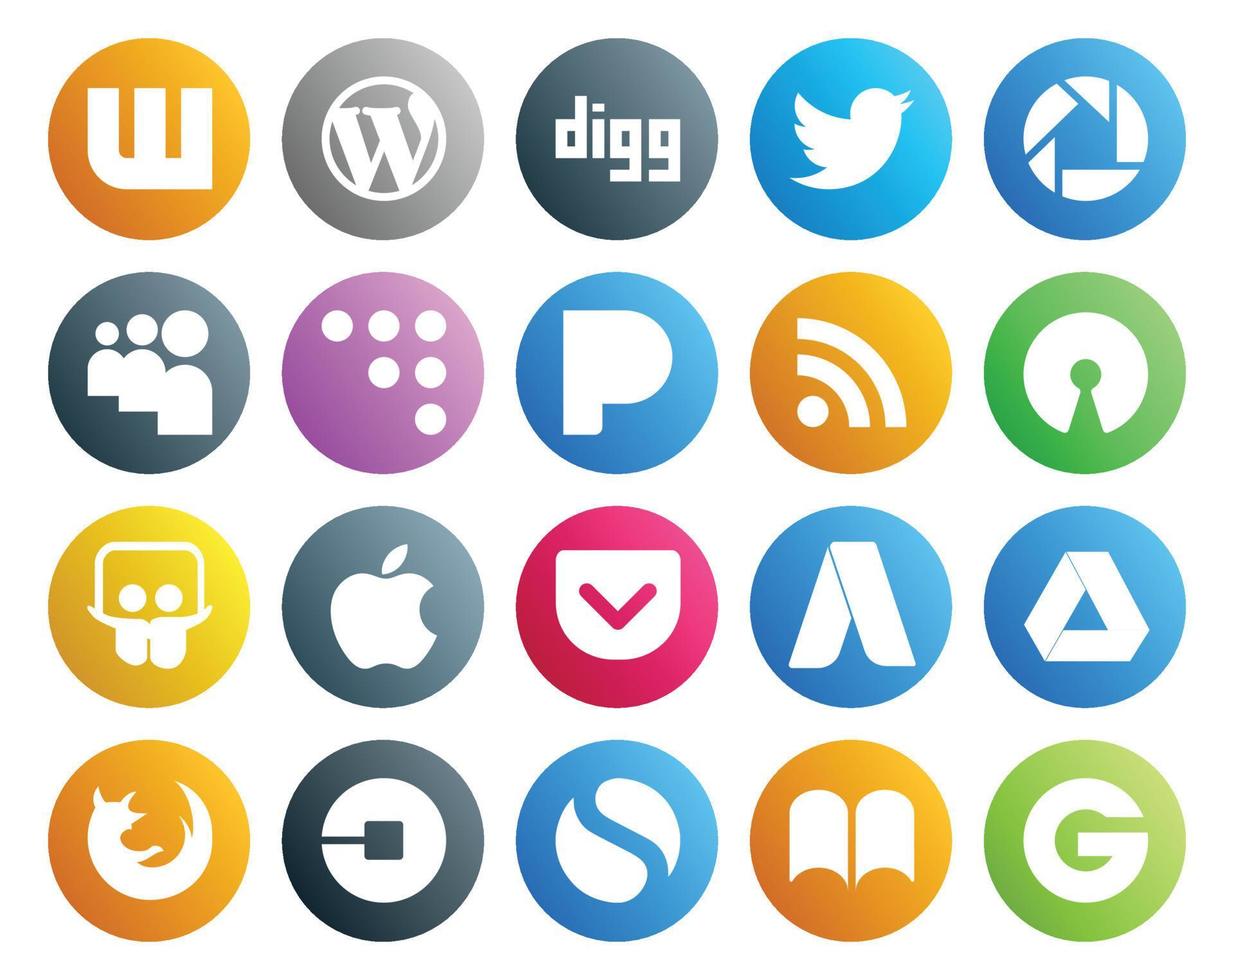 20 Social Media Icon Pack Including firefox adwords coderwall pocket slideshare vector